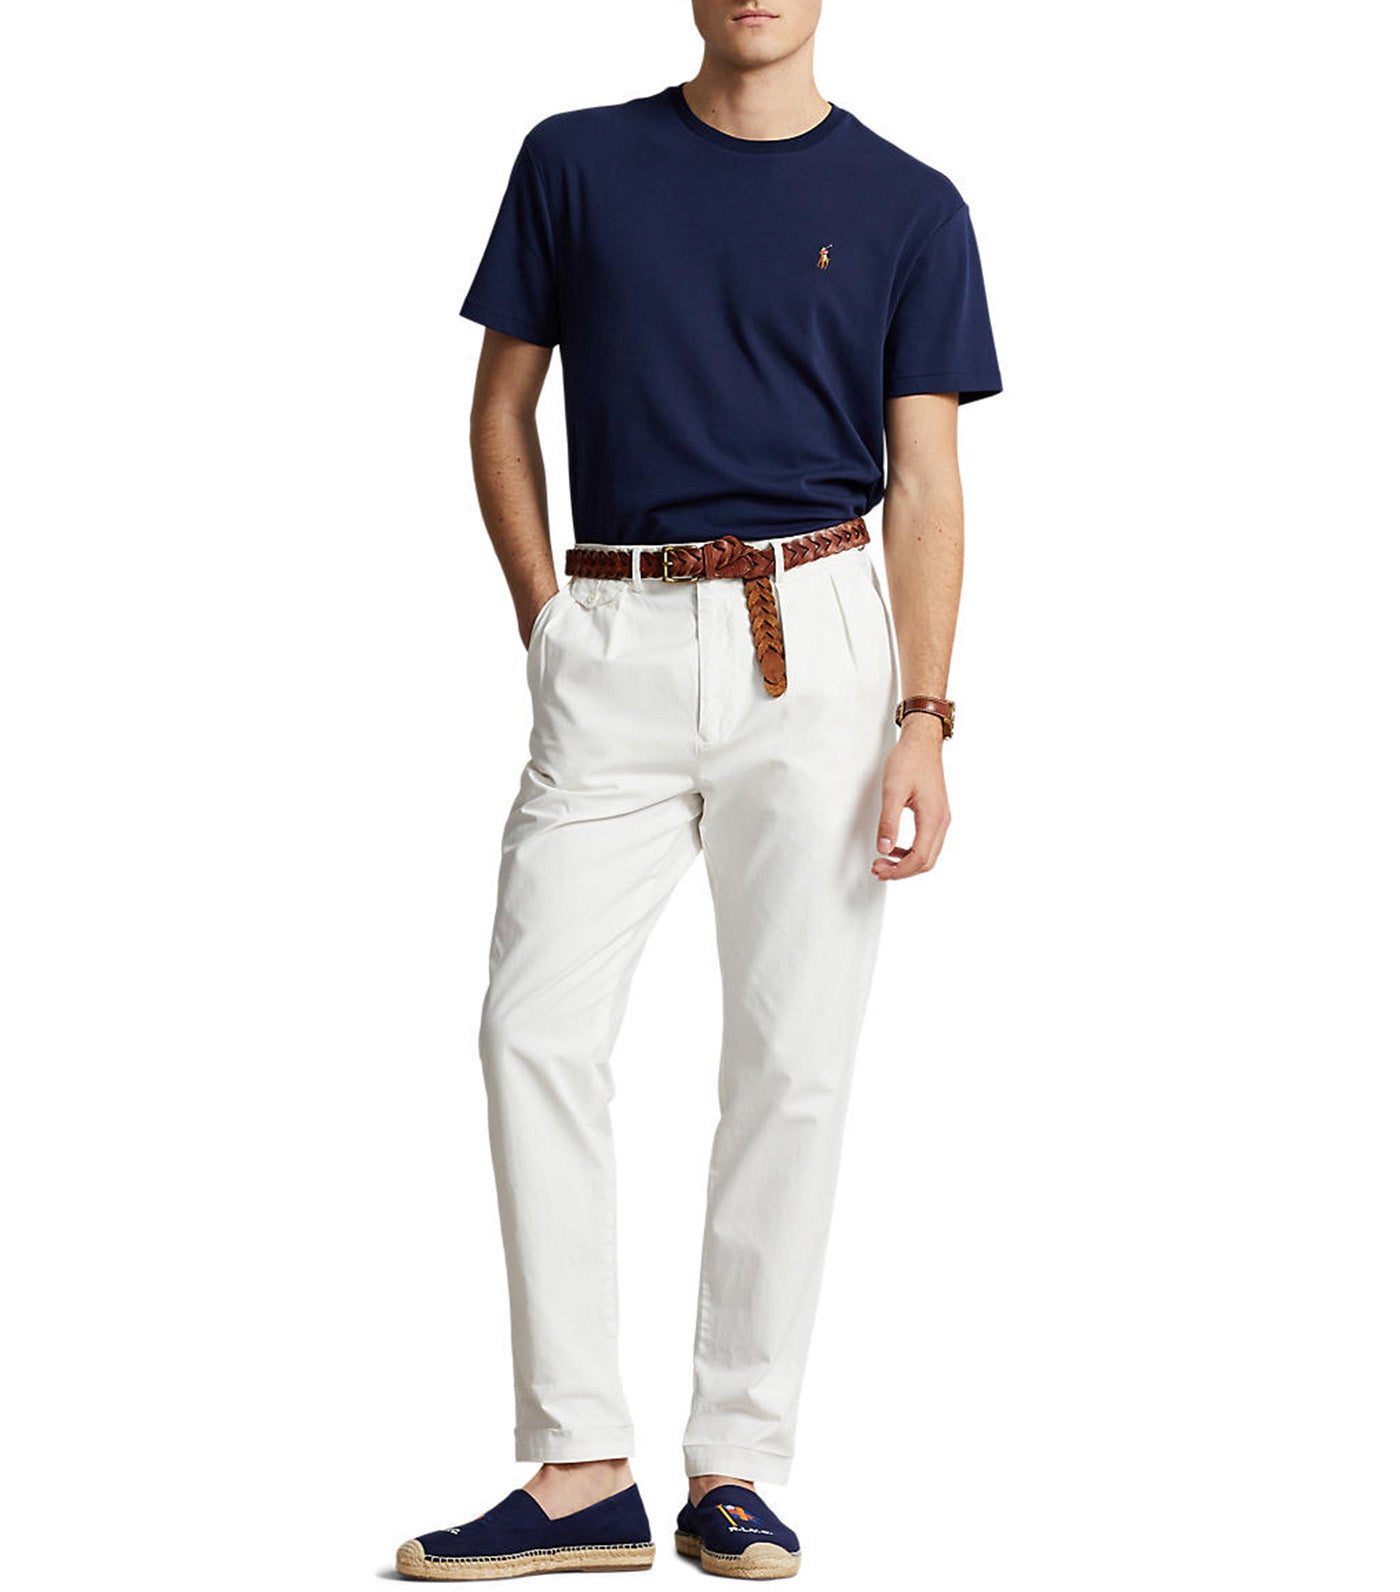 Men's Custom Slim Fit Soft Cotton T-Shirt Navy